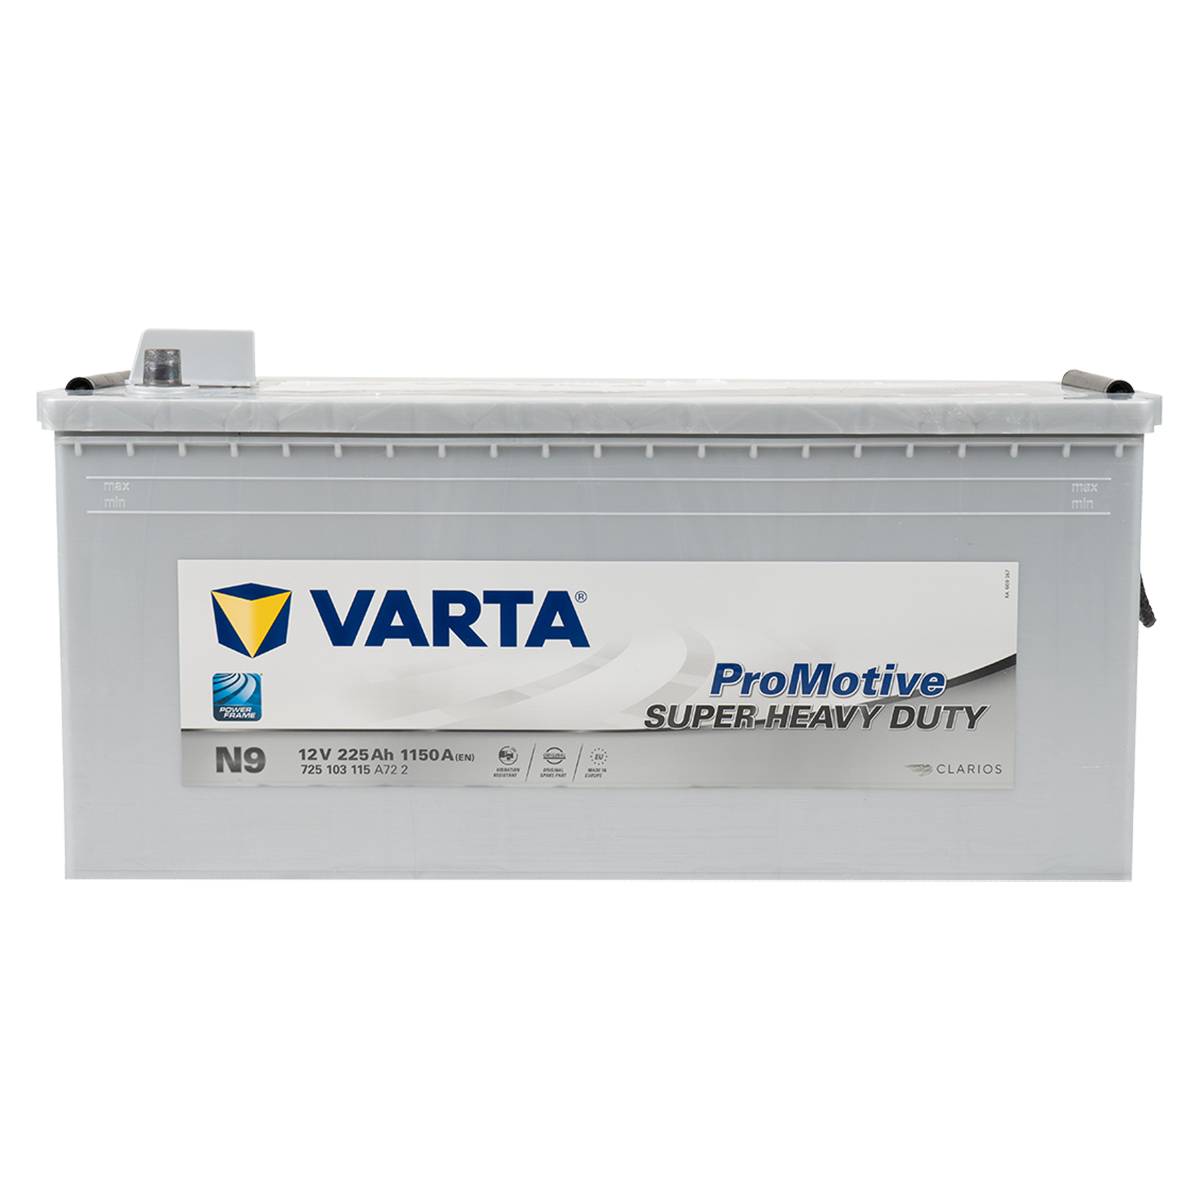 VARTA N9 ProMotive Super Heavy Duty 12V 225Ah 1150A LKW Batterie 725 103 115